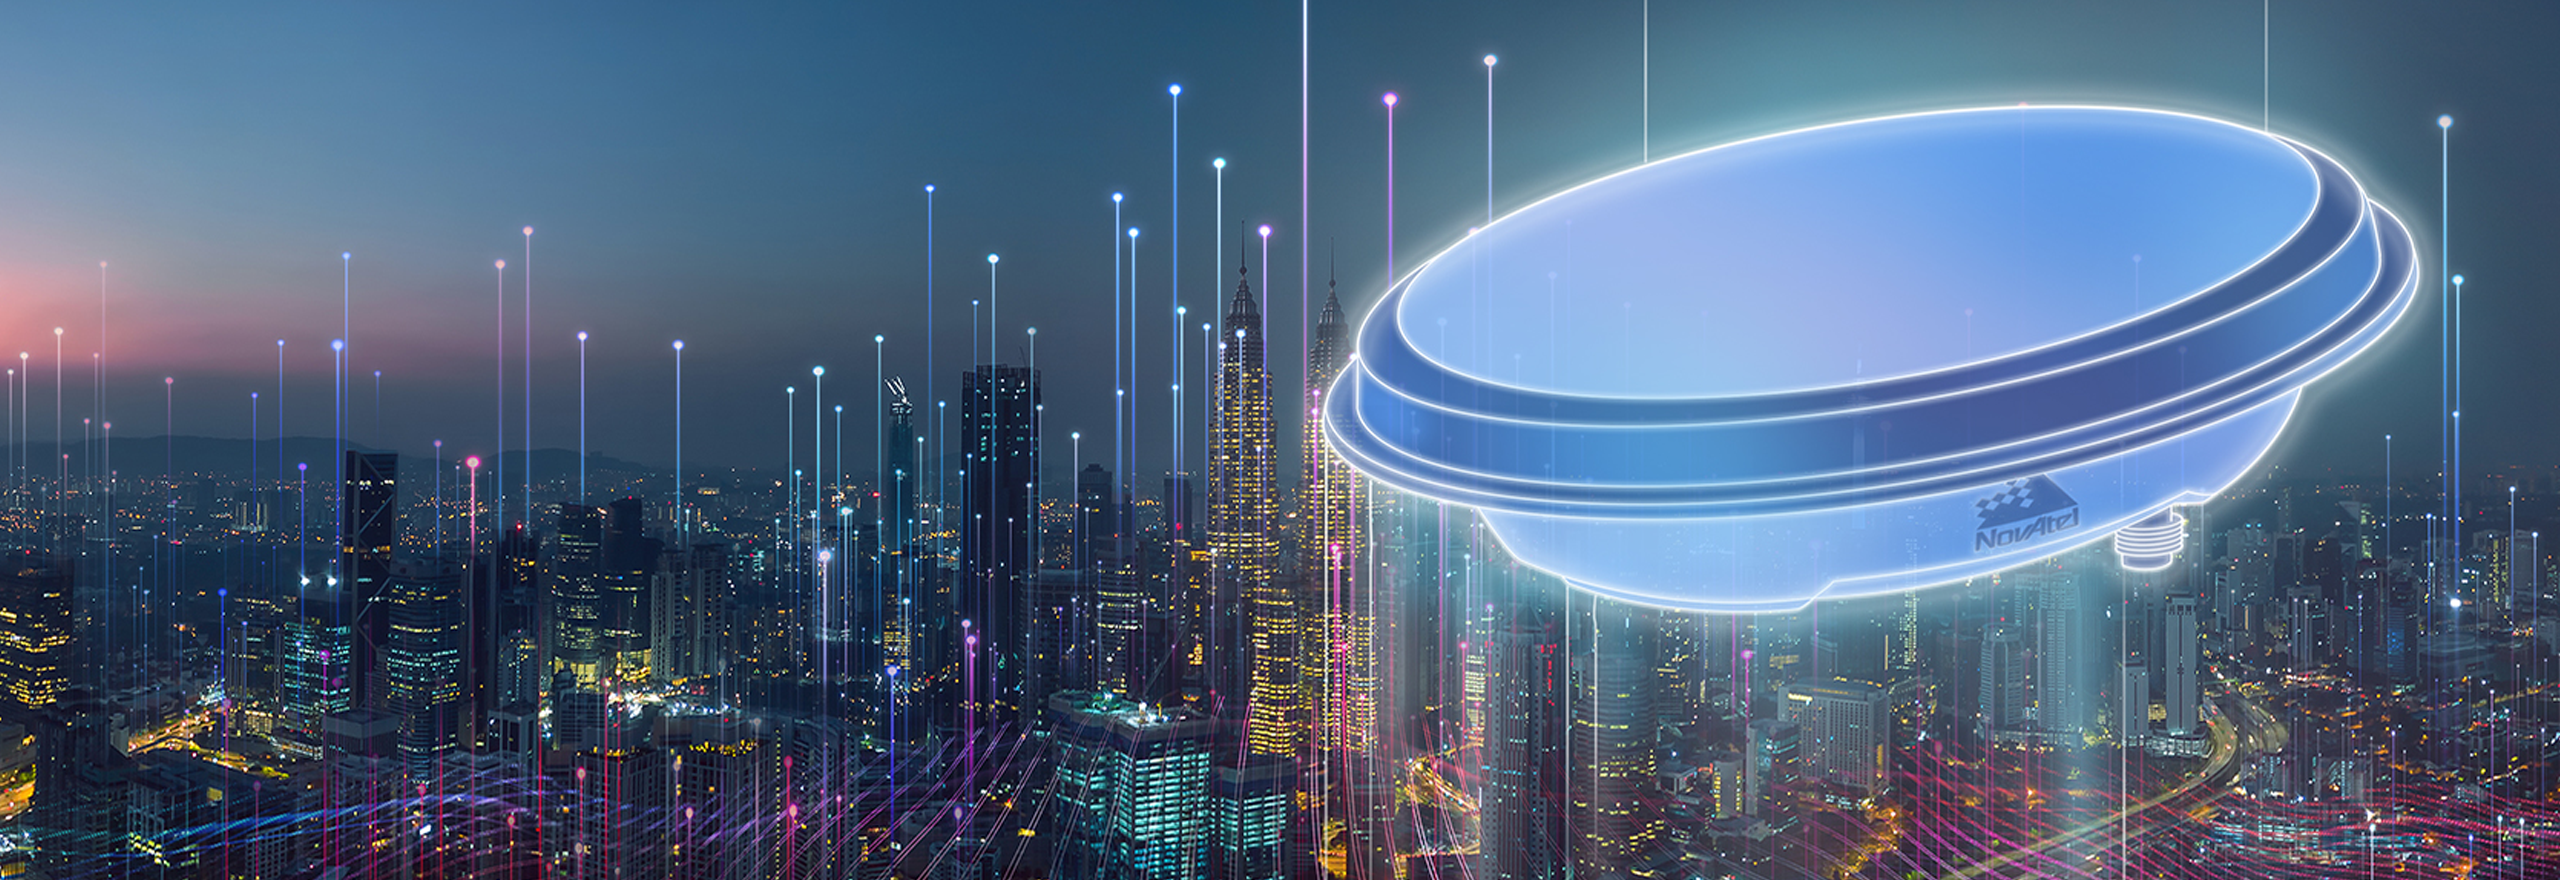 A futuristic city scape with a white NovAtel antenna overtop the image.  